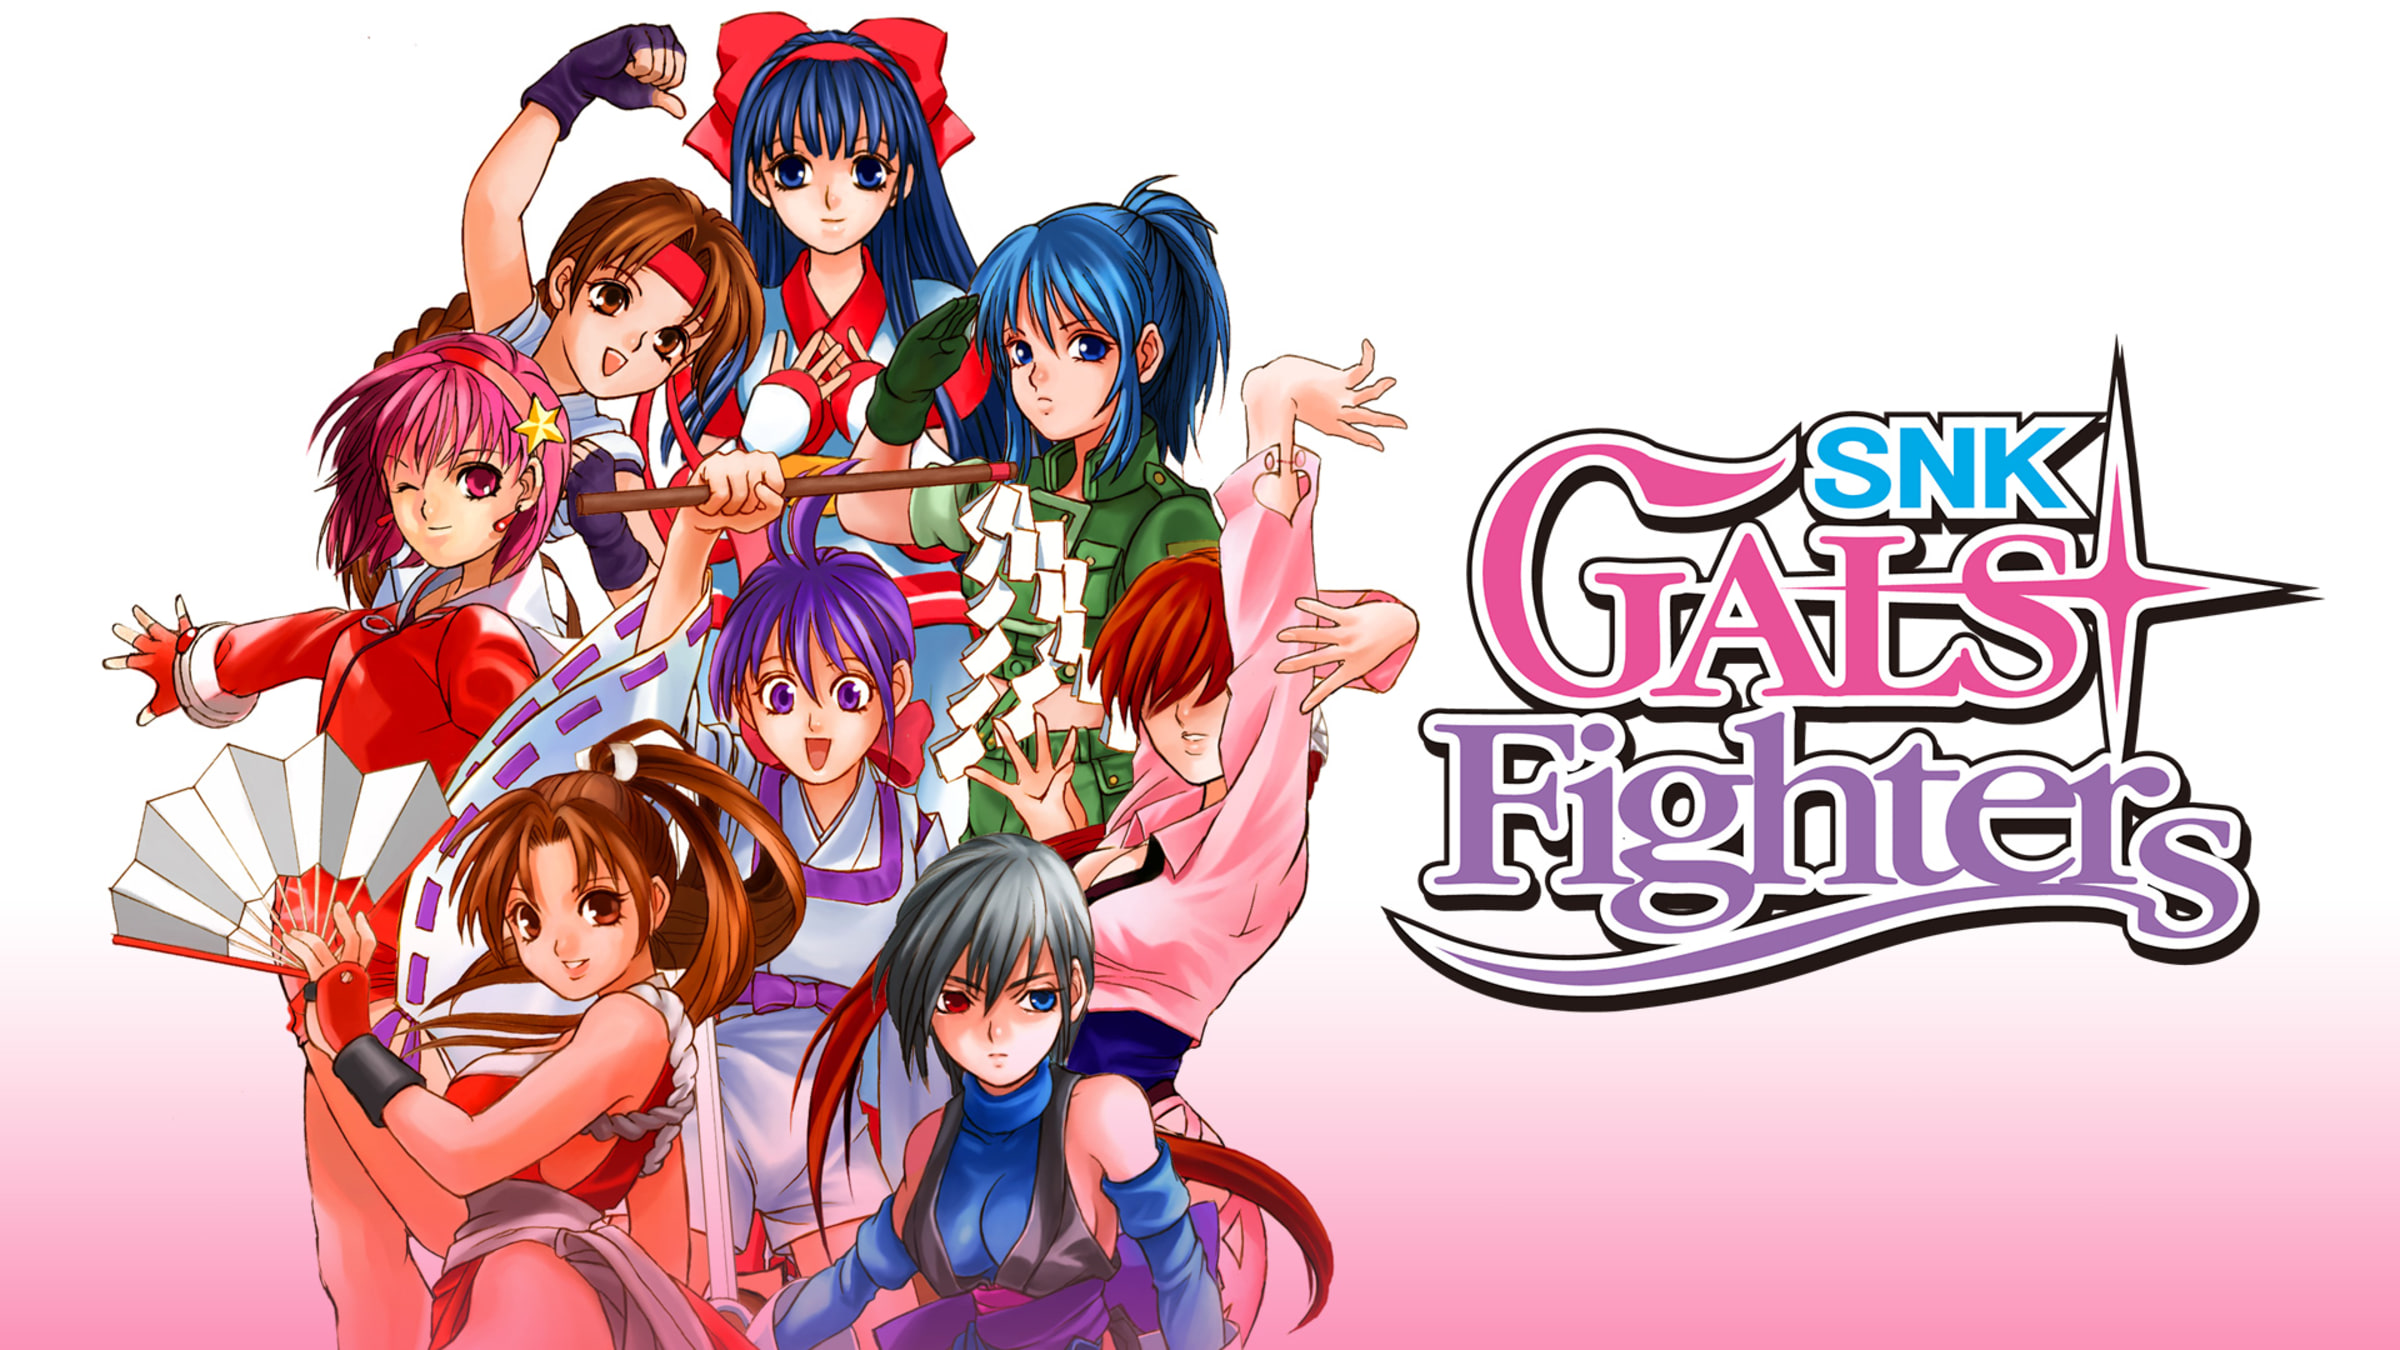 Fighting Game Art Gallery - Capcom, SNK, Namco